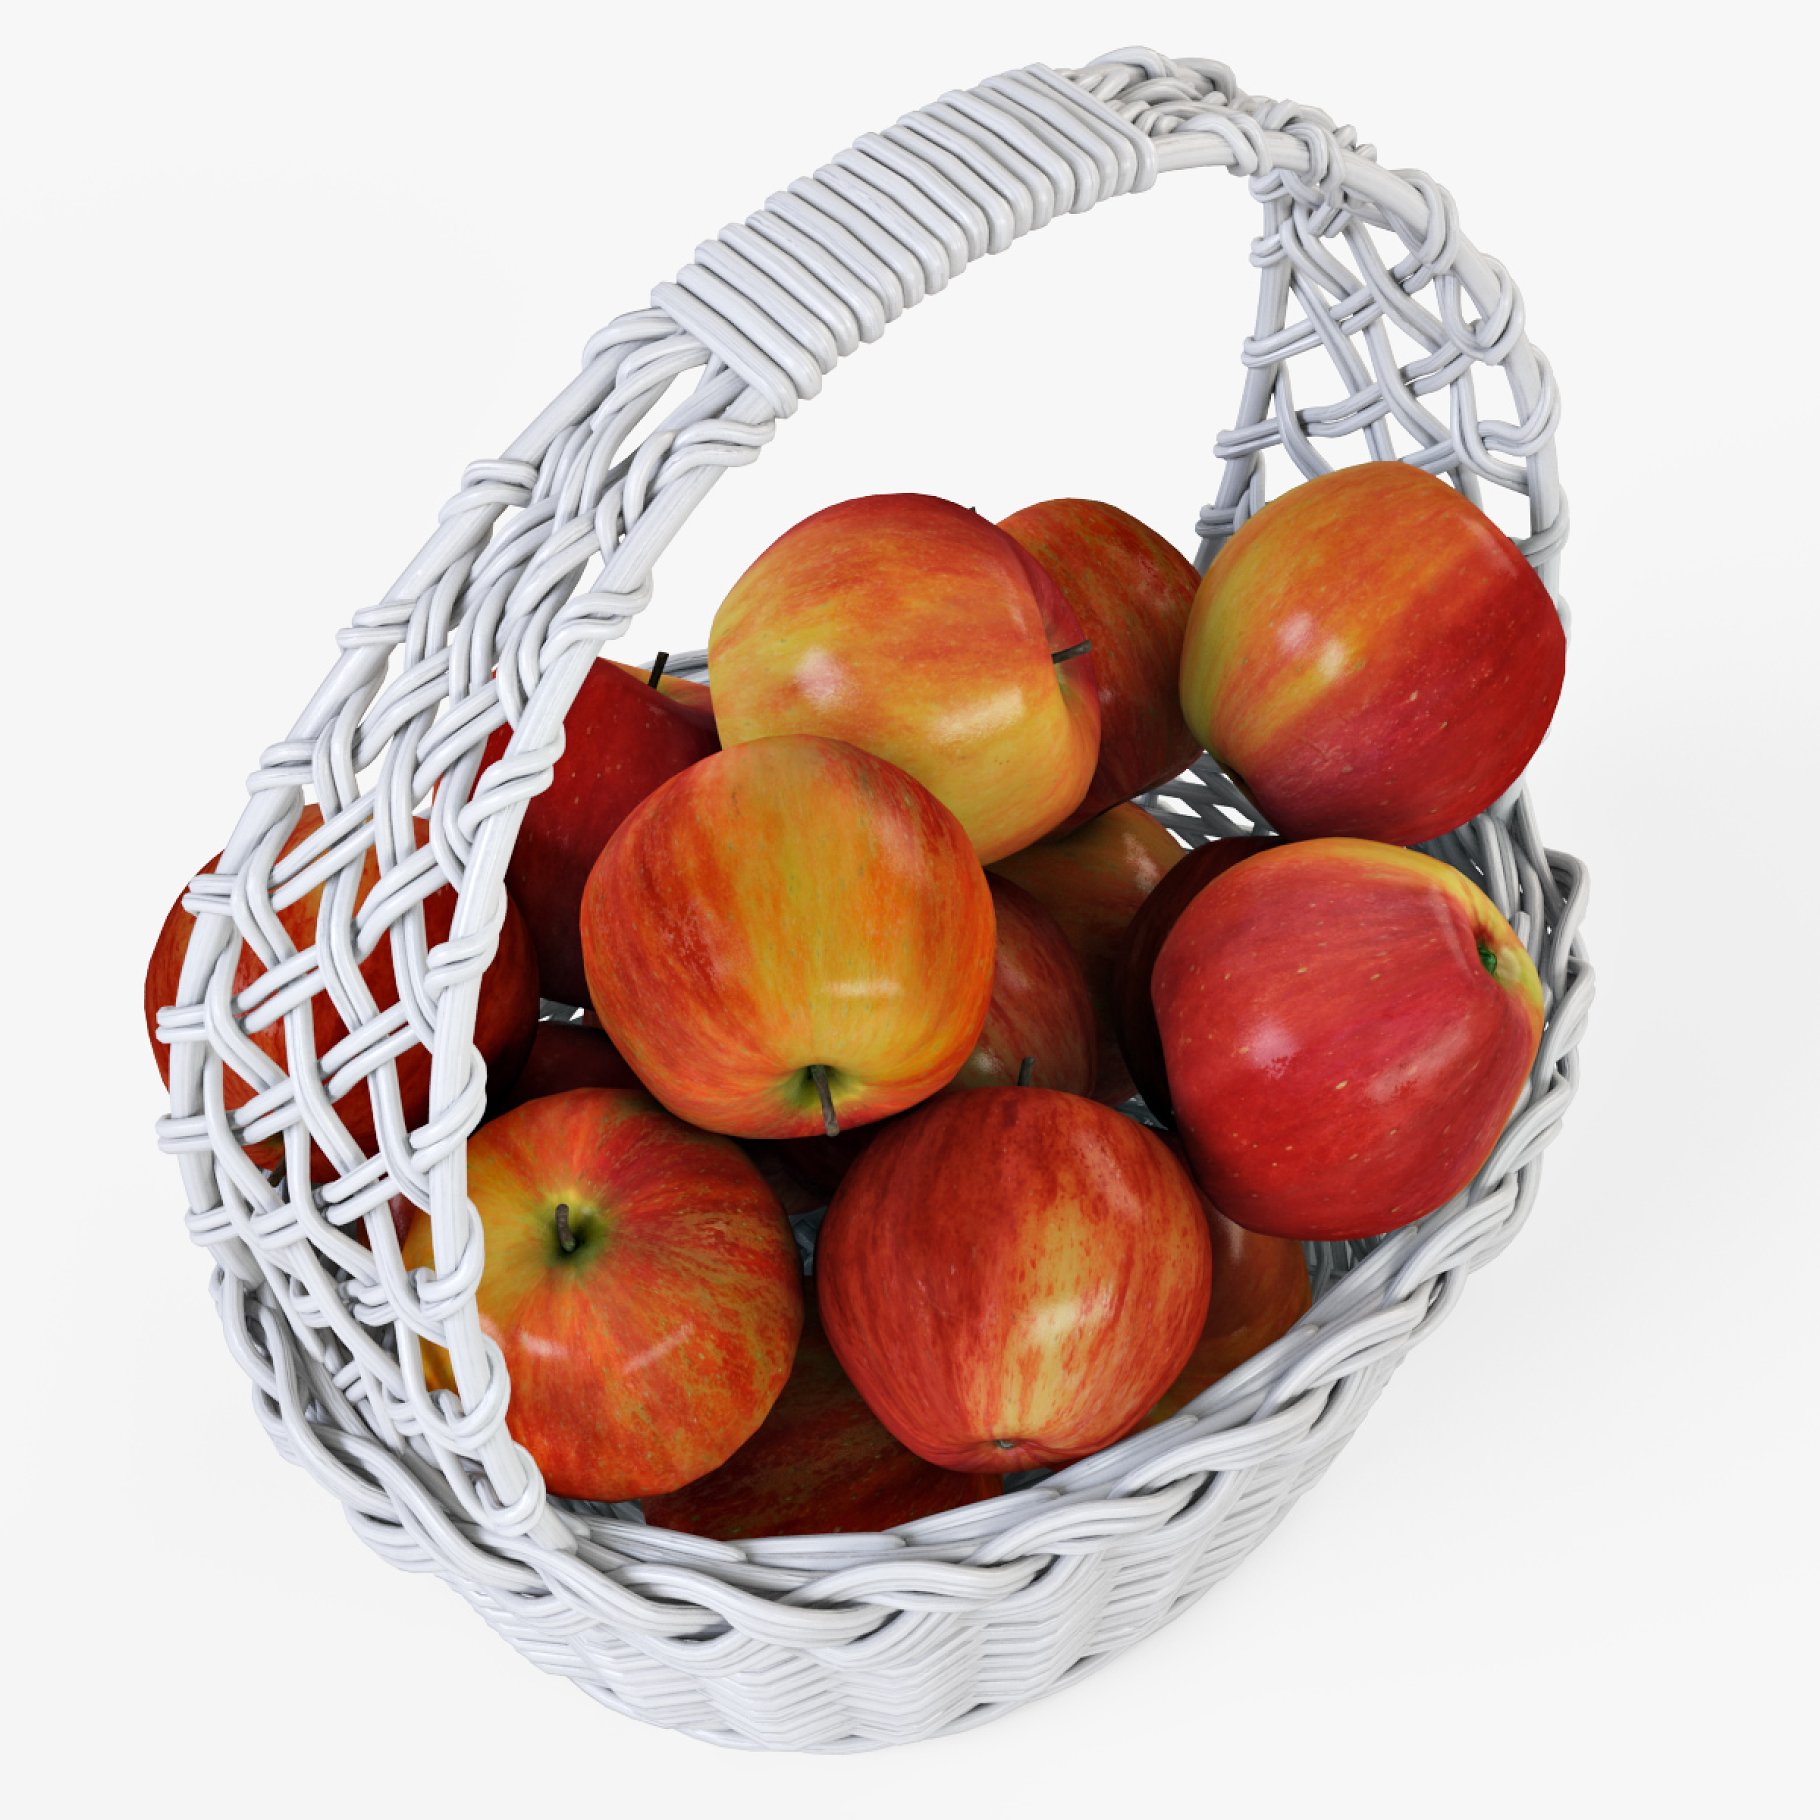 A basket of apples.